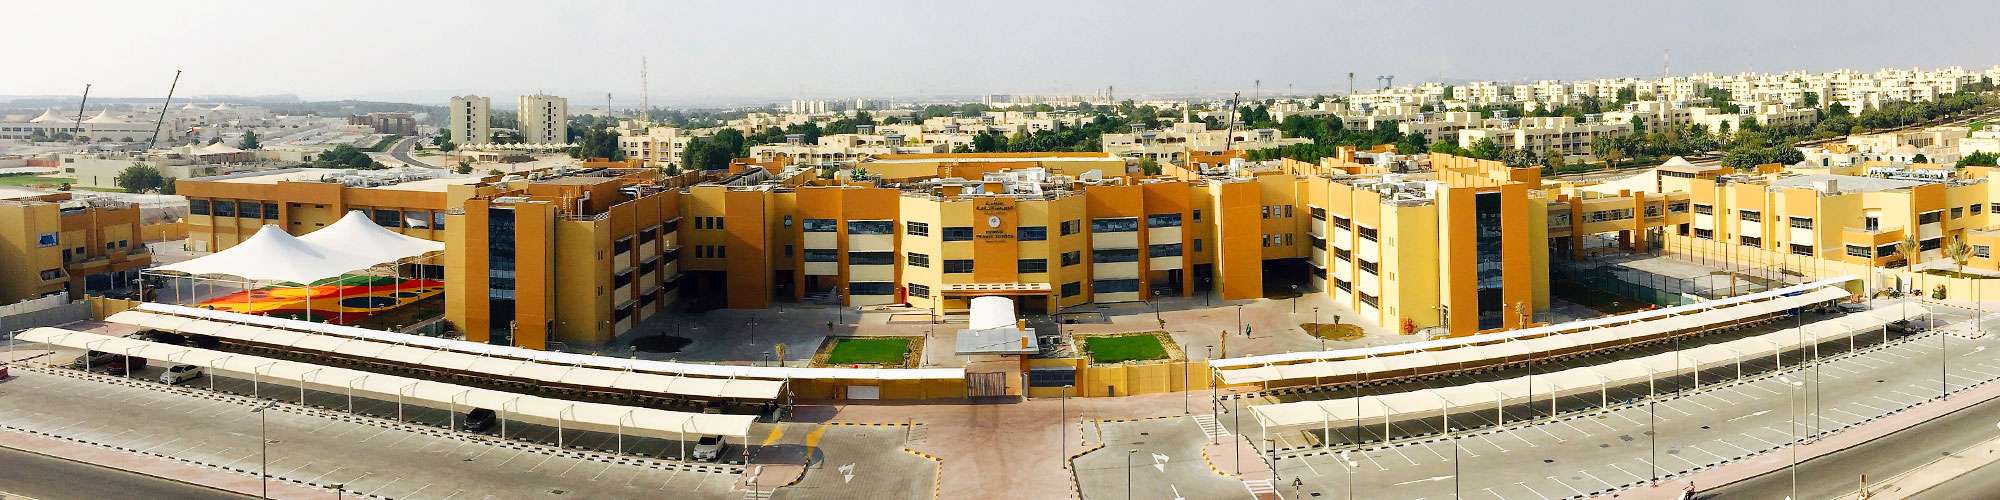 SABIS International School-Ruwais, Abu Dhabi